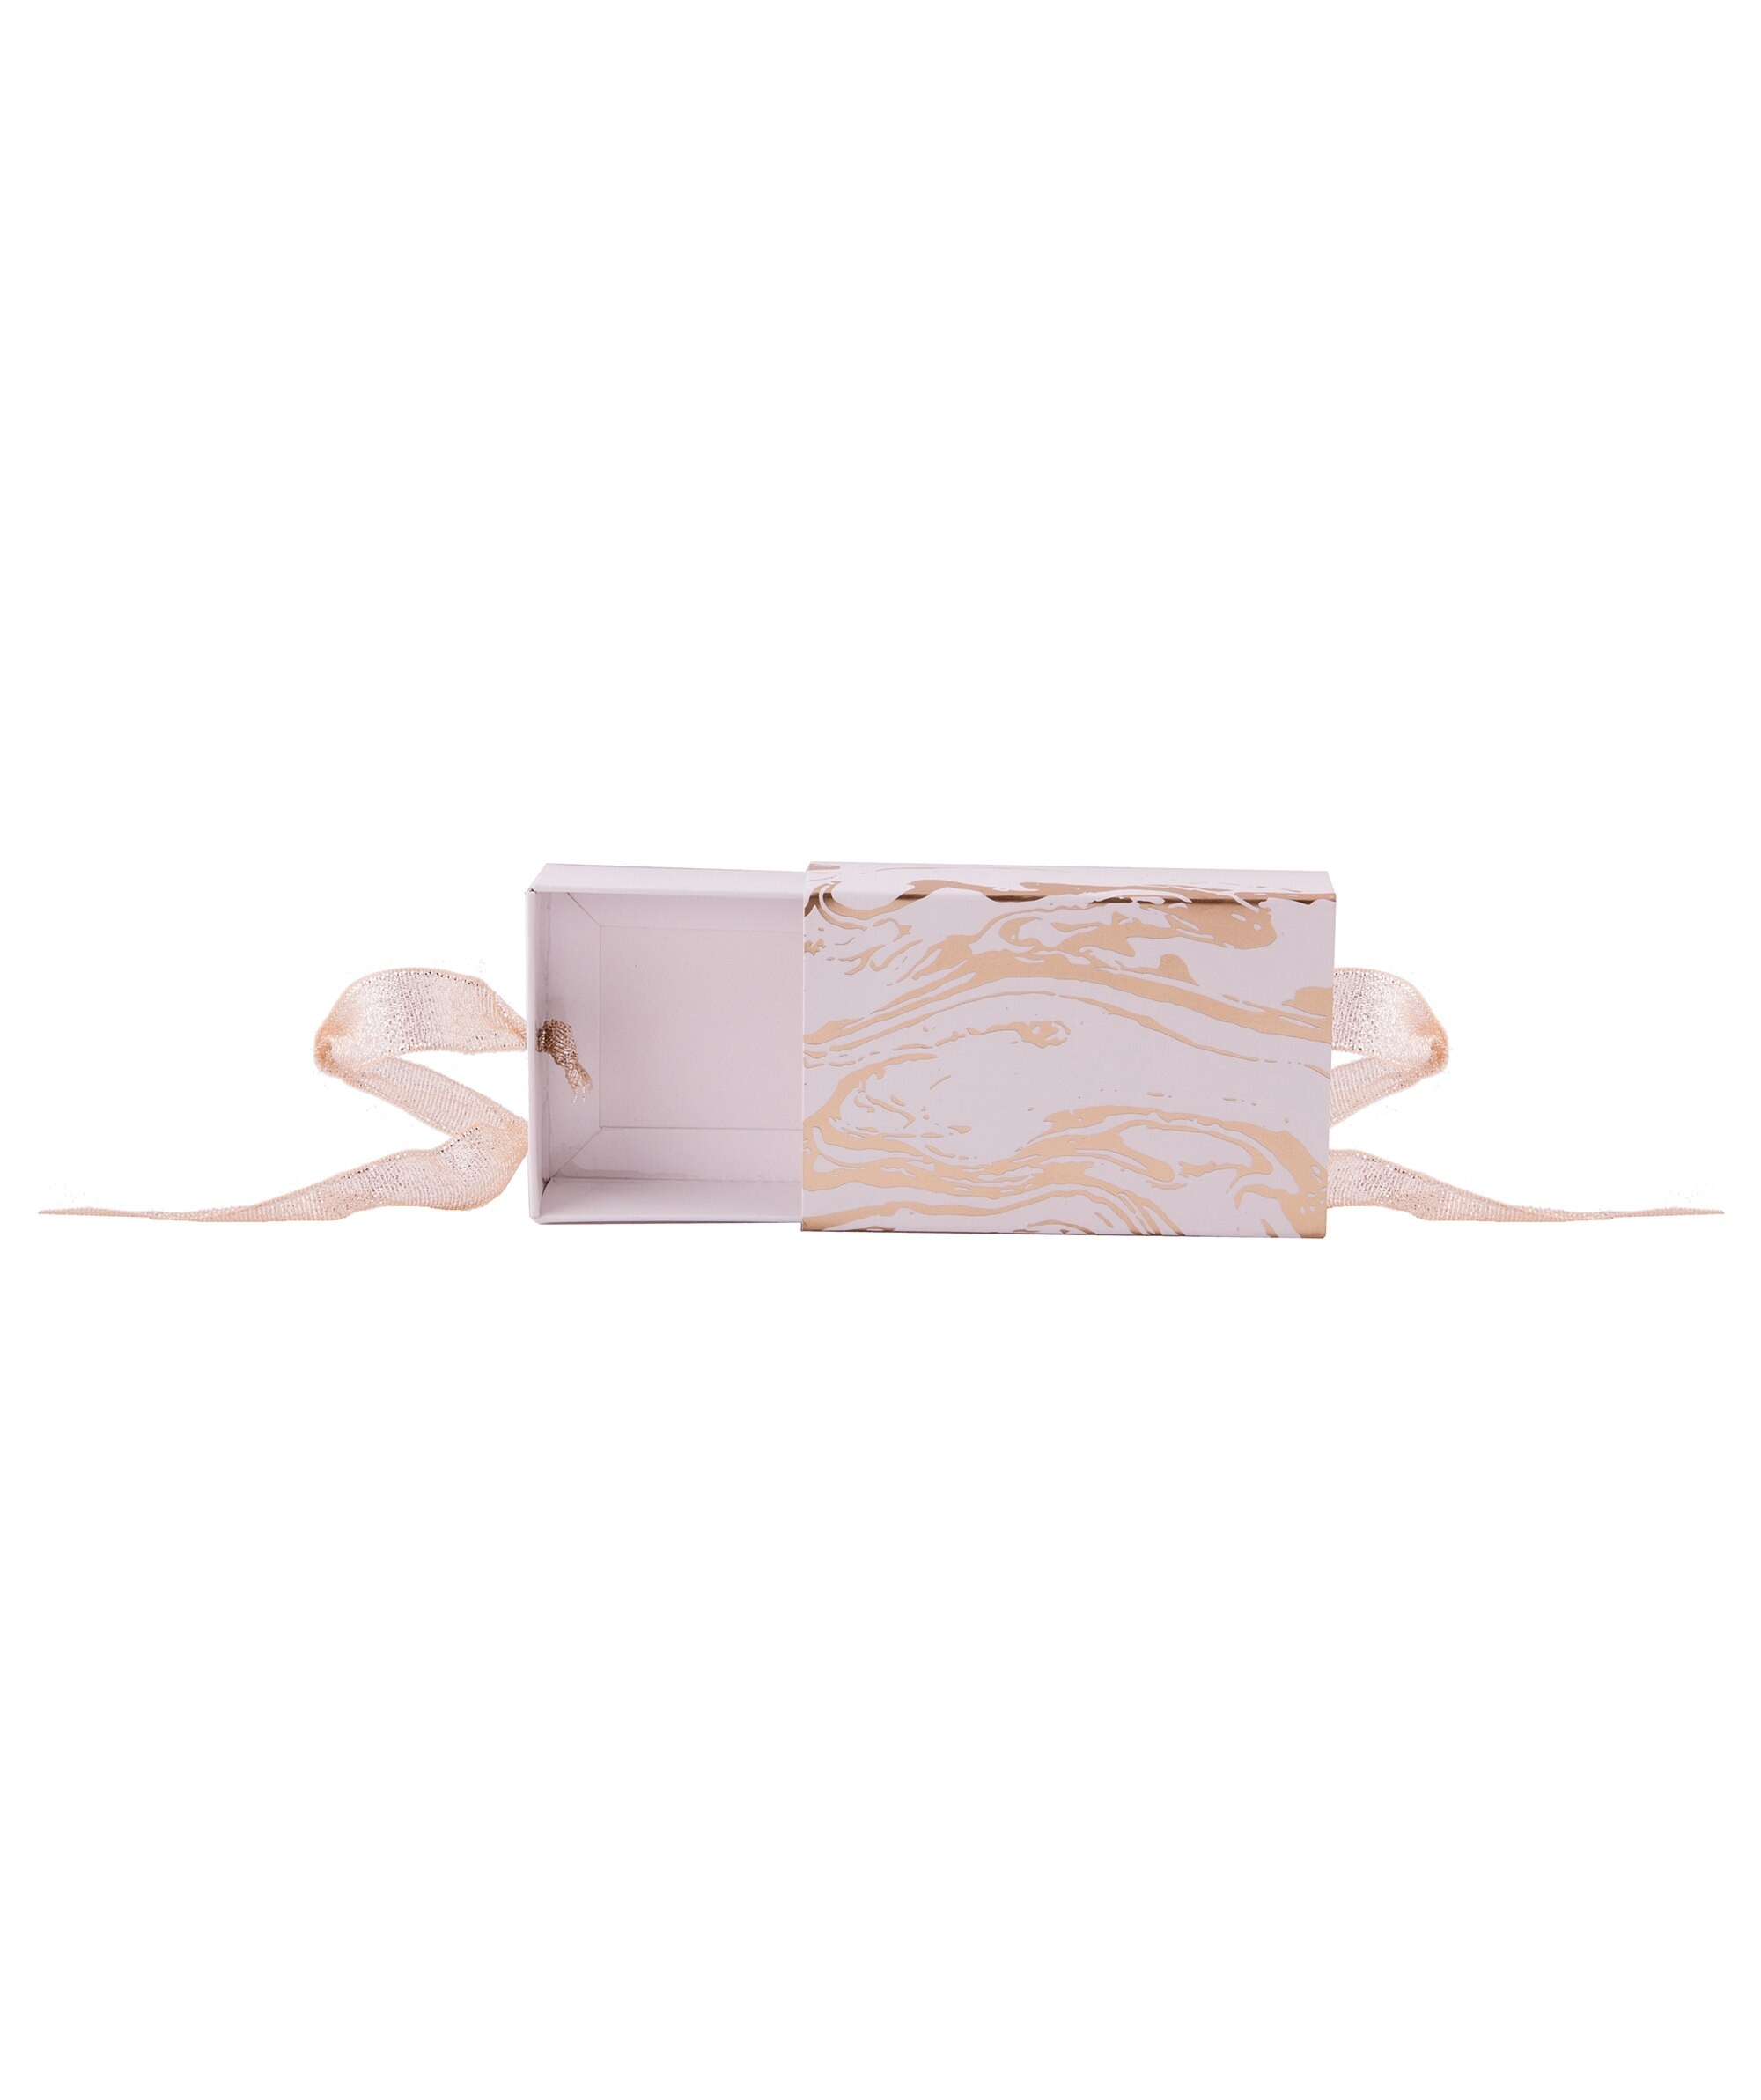 Gift Card Gift Box - White/Gold